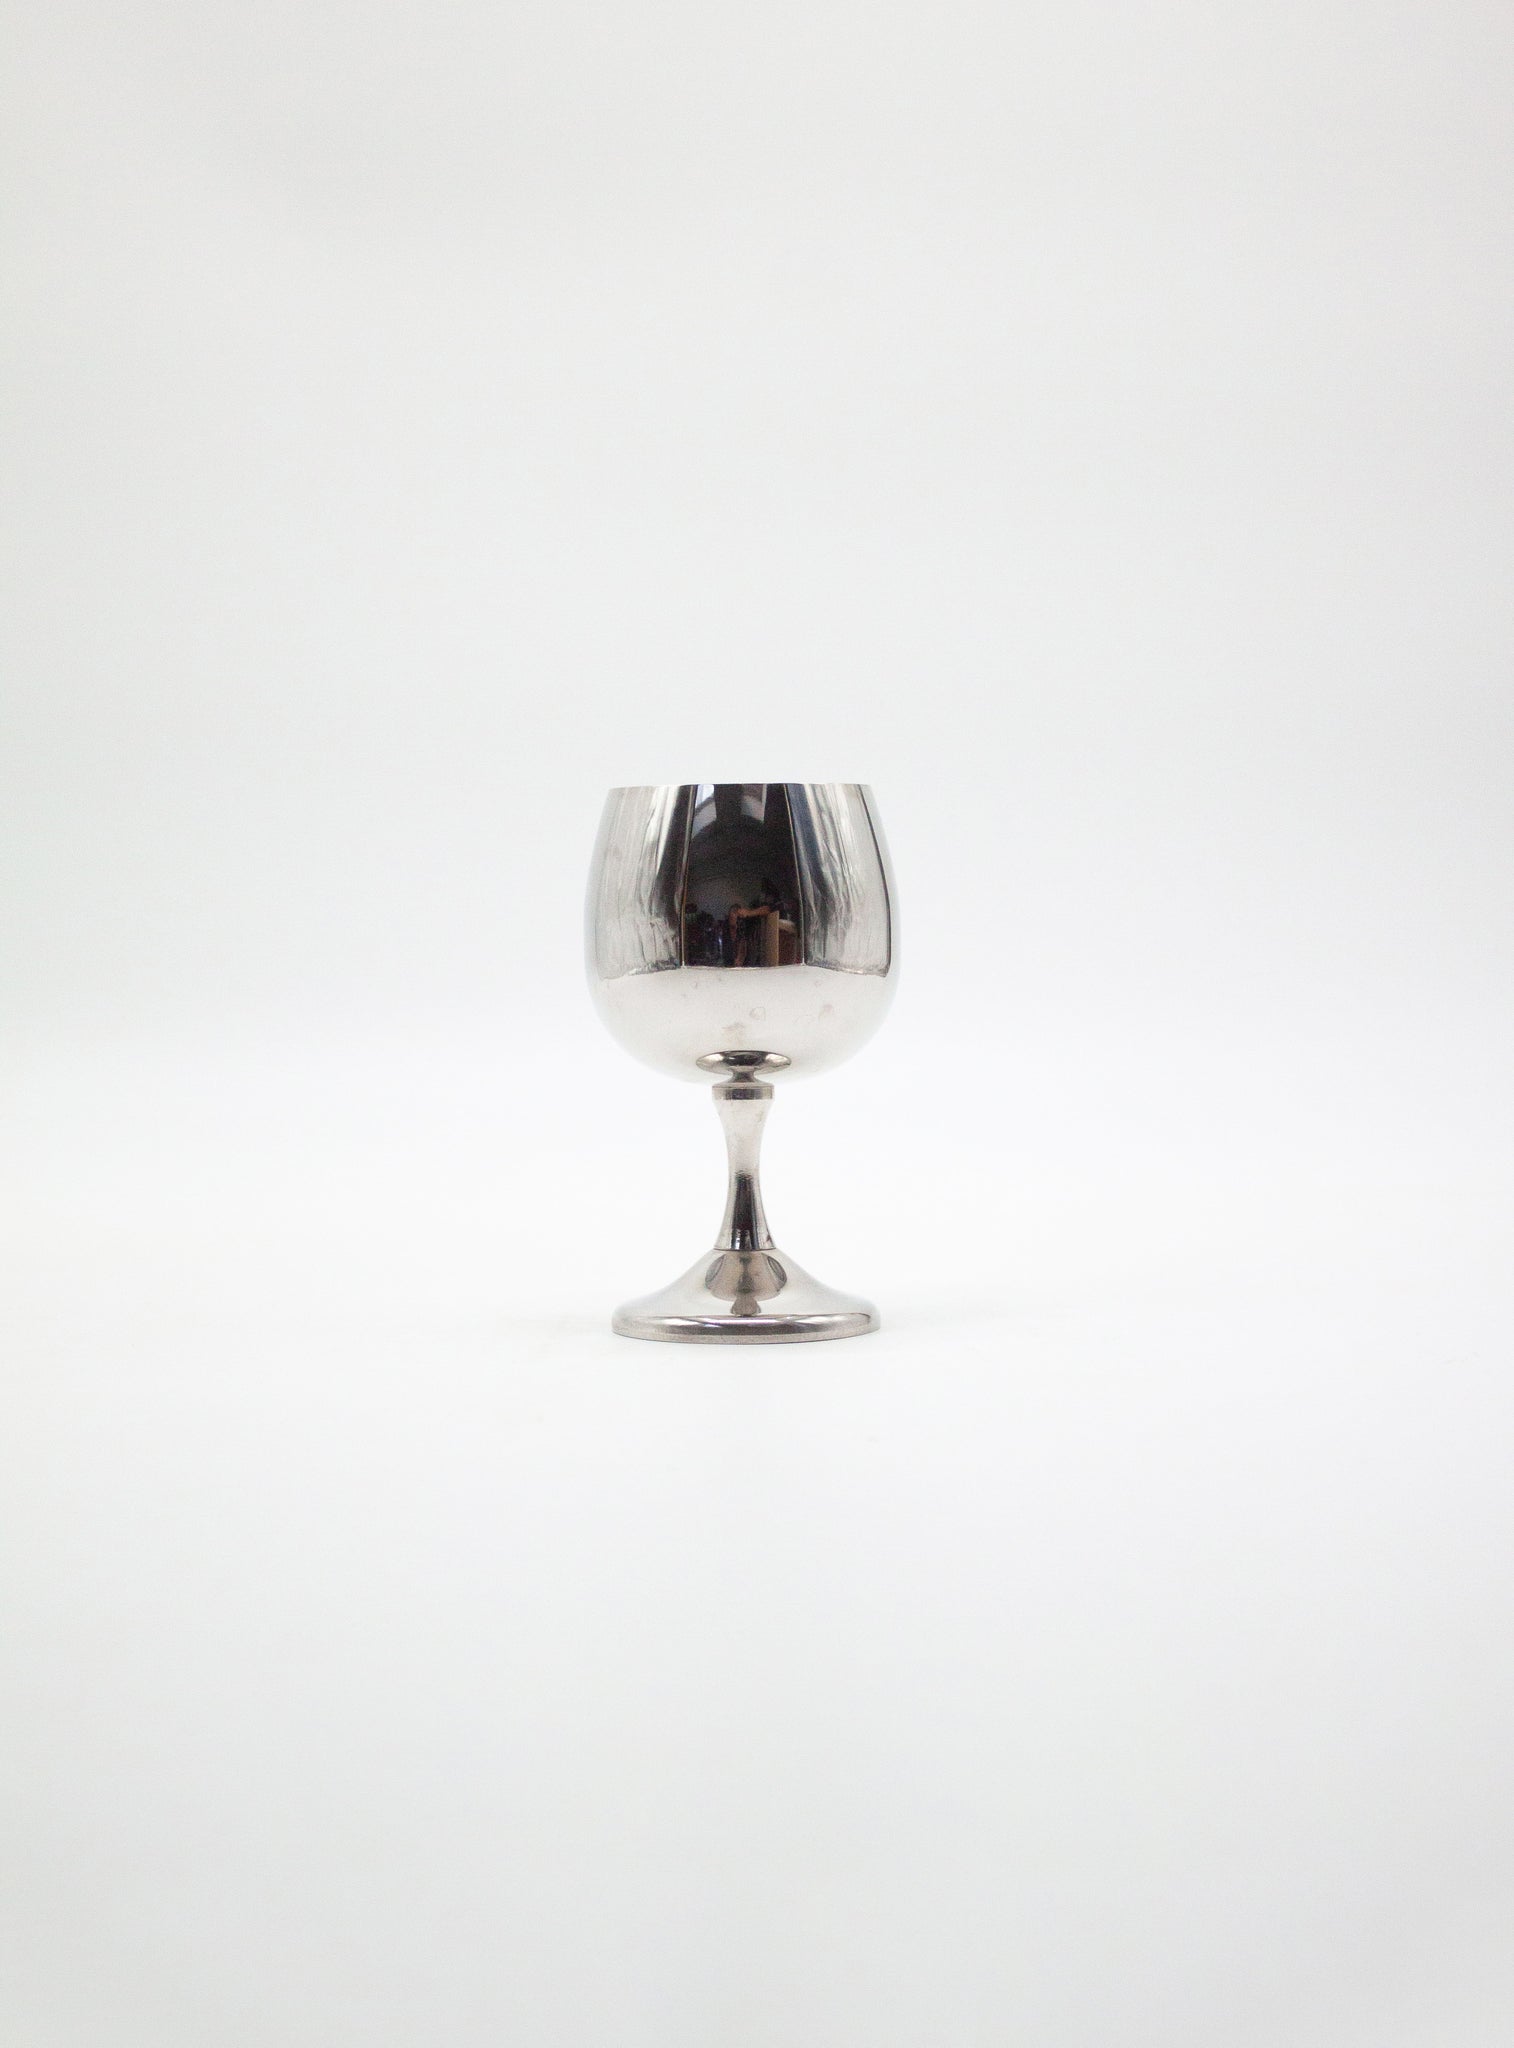 AMC Italy Stainless Steel Wine Glasses (art. 2056)